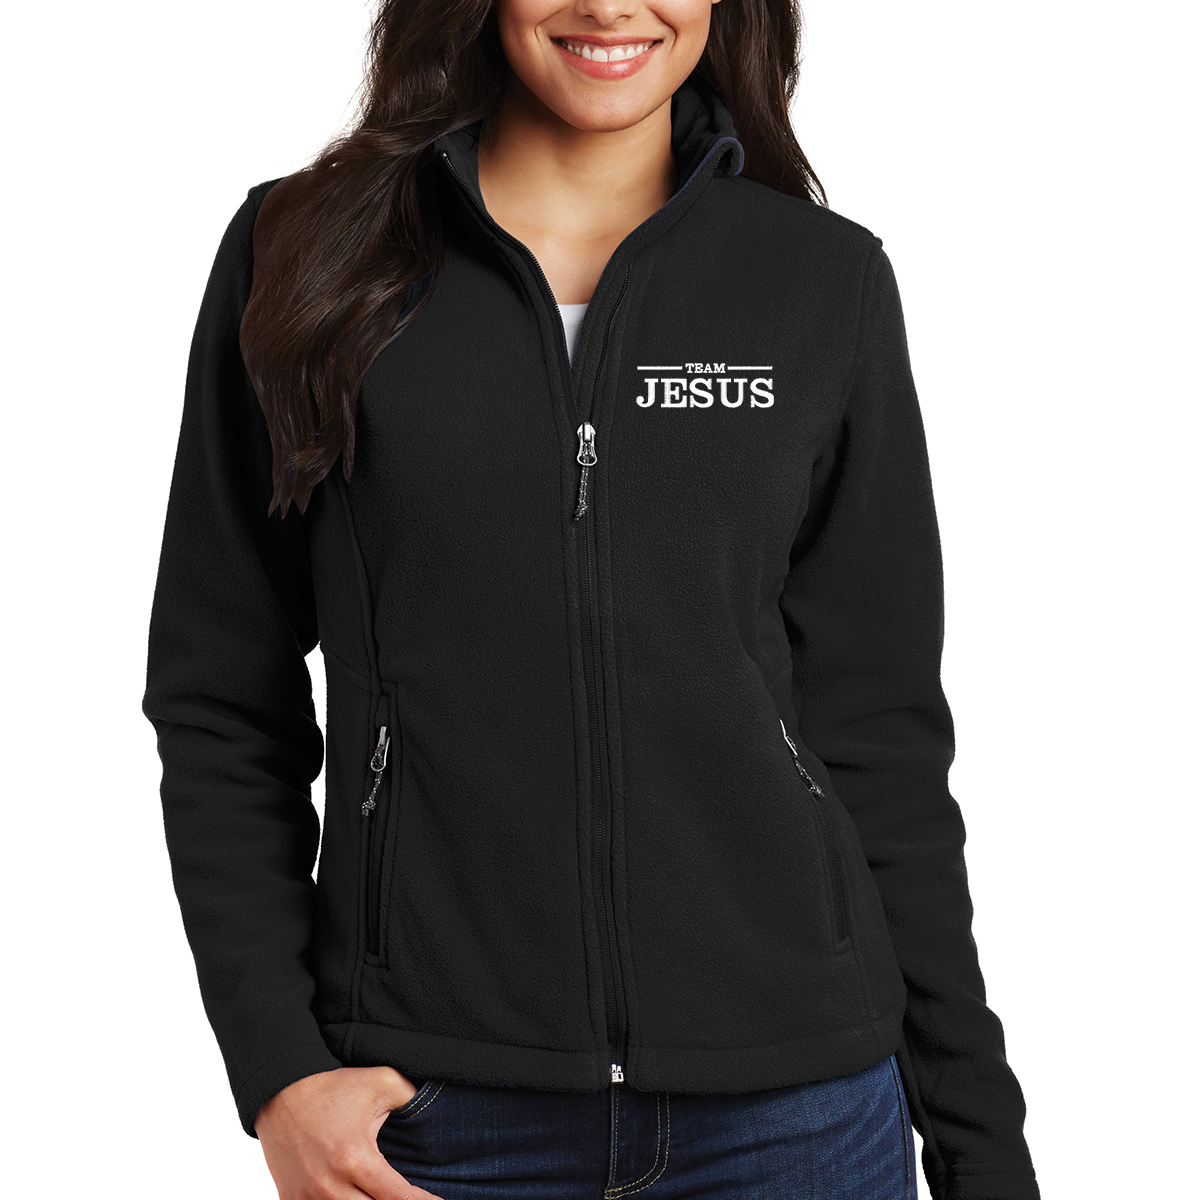 Ladies Microfleece Team Jesus Jacket